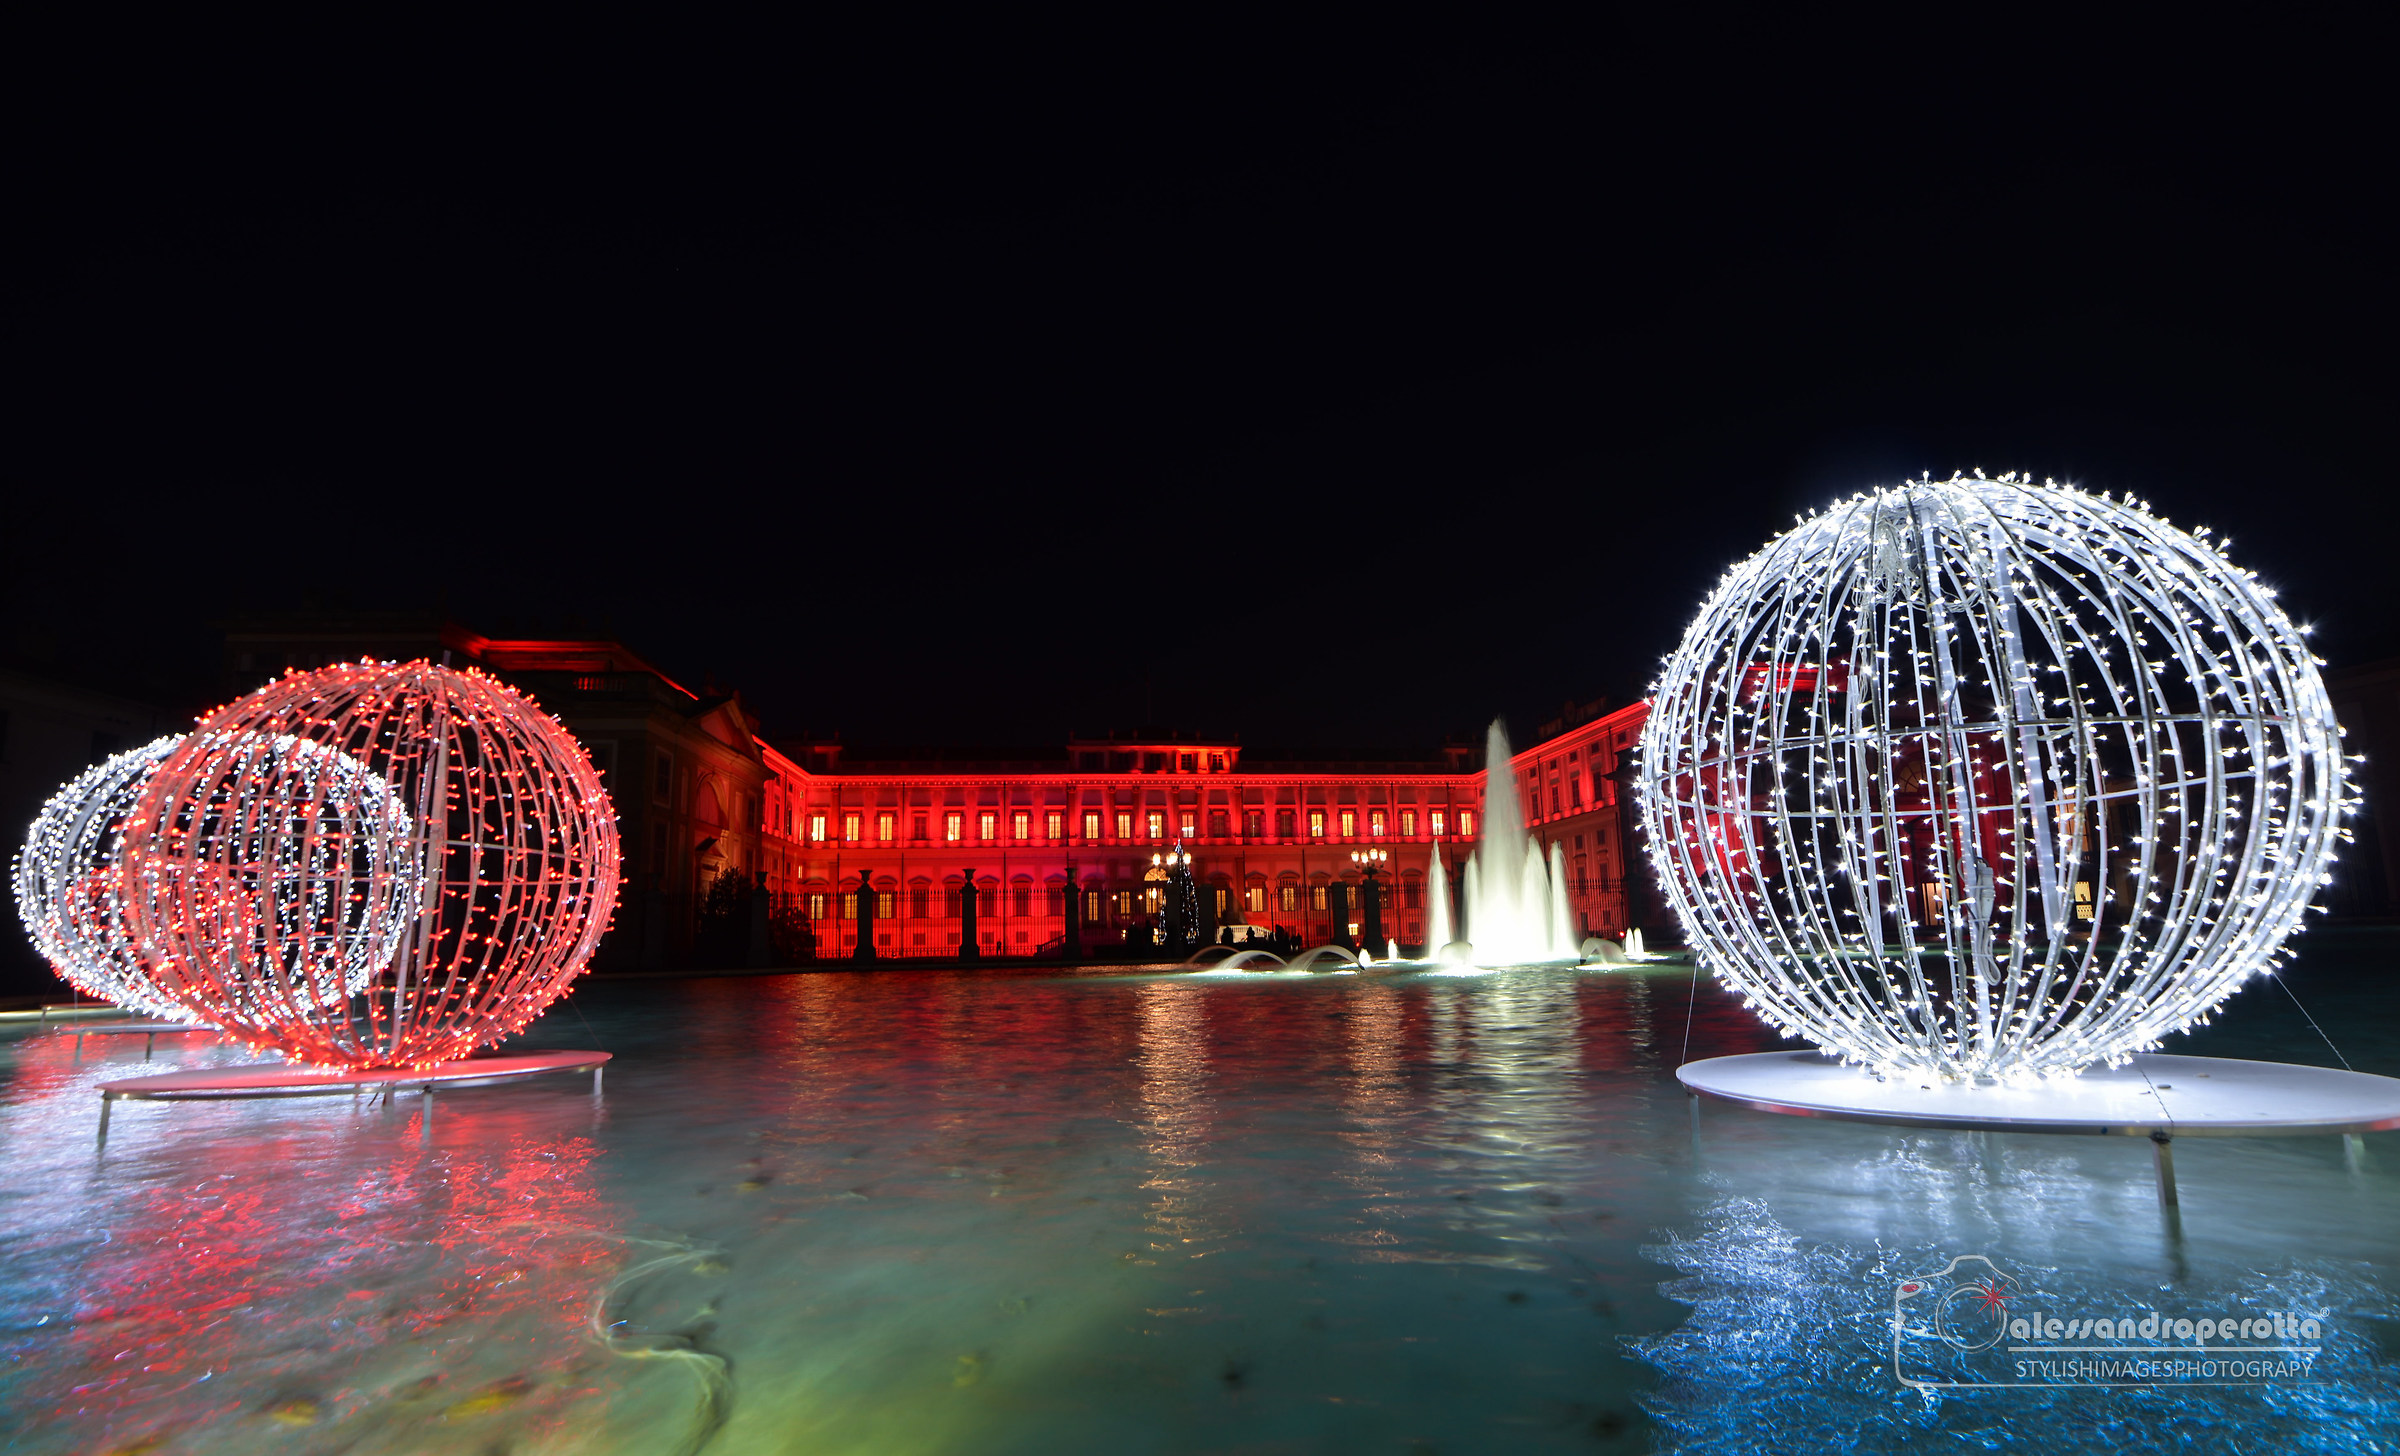 Natale in Villa Reale...